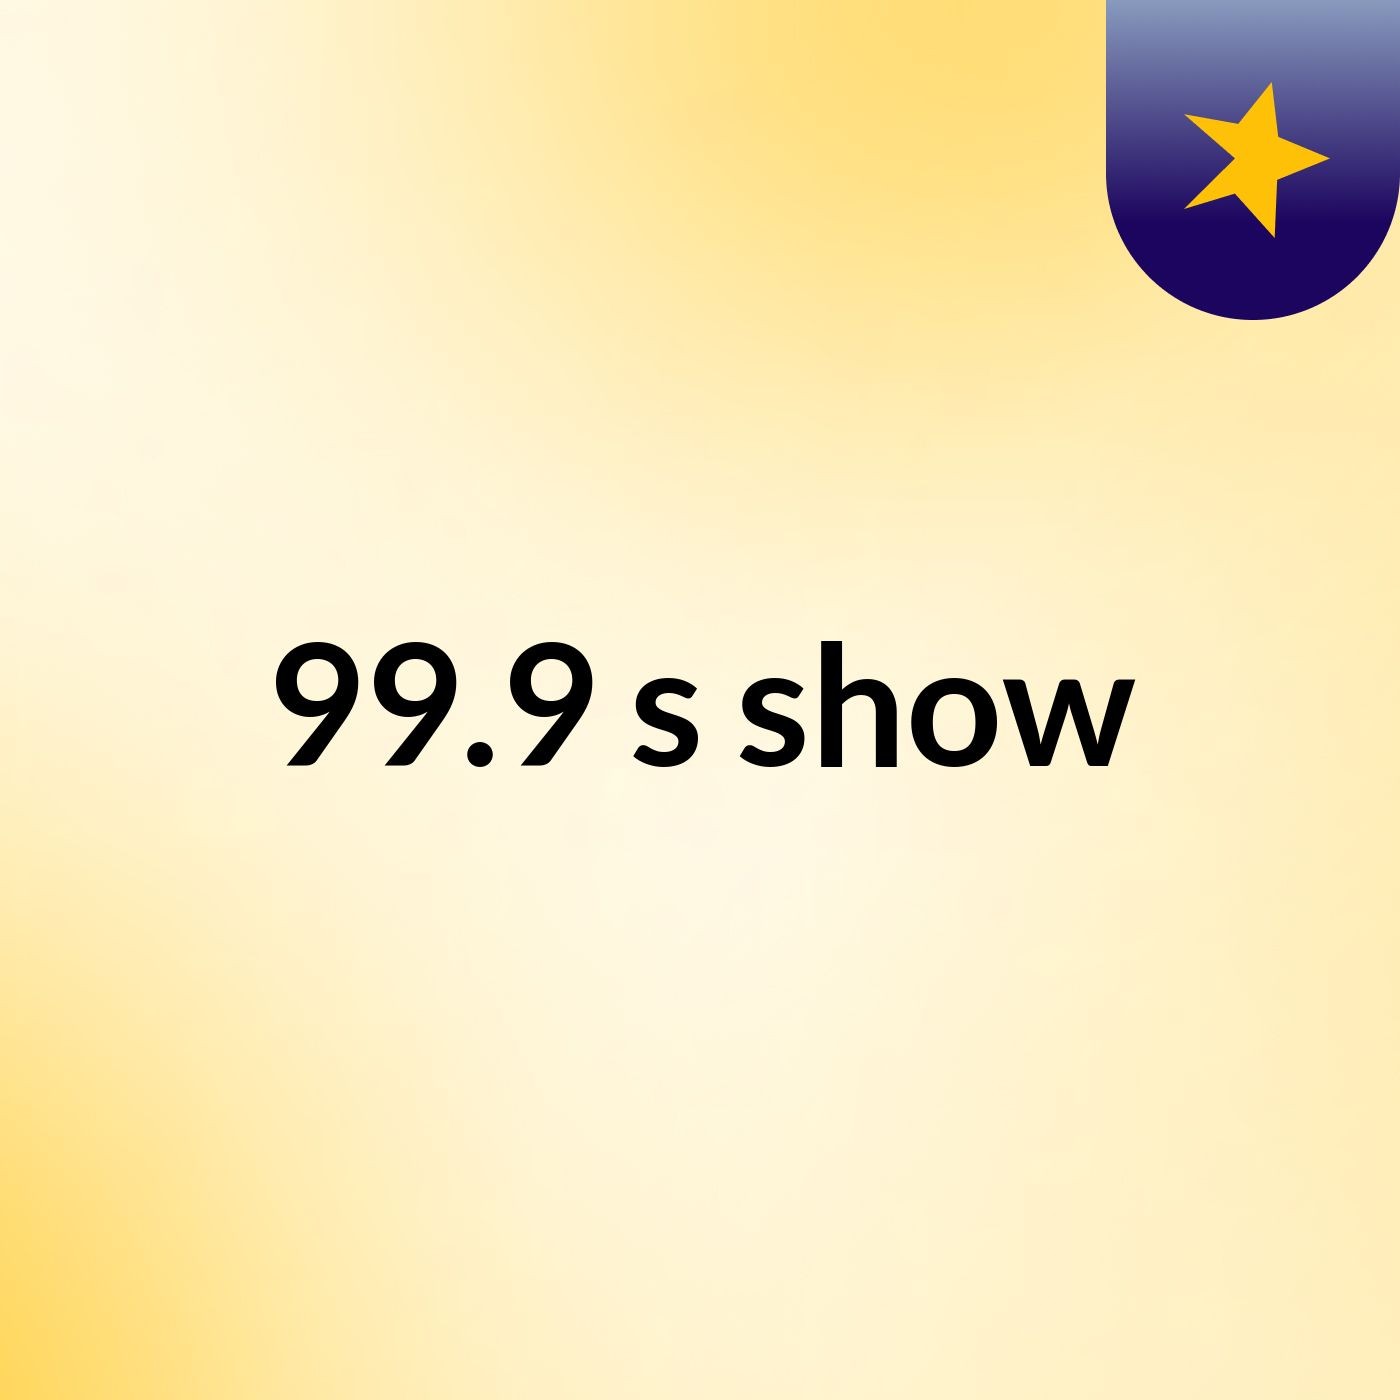 99.9's show